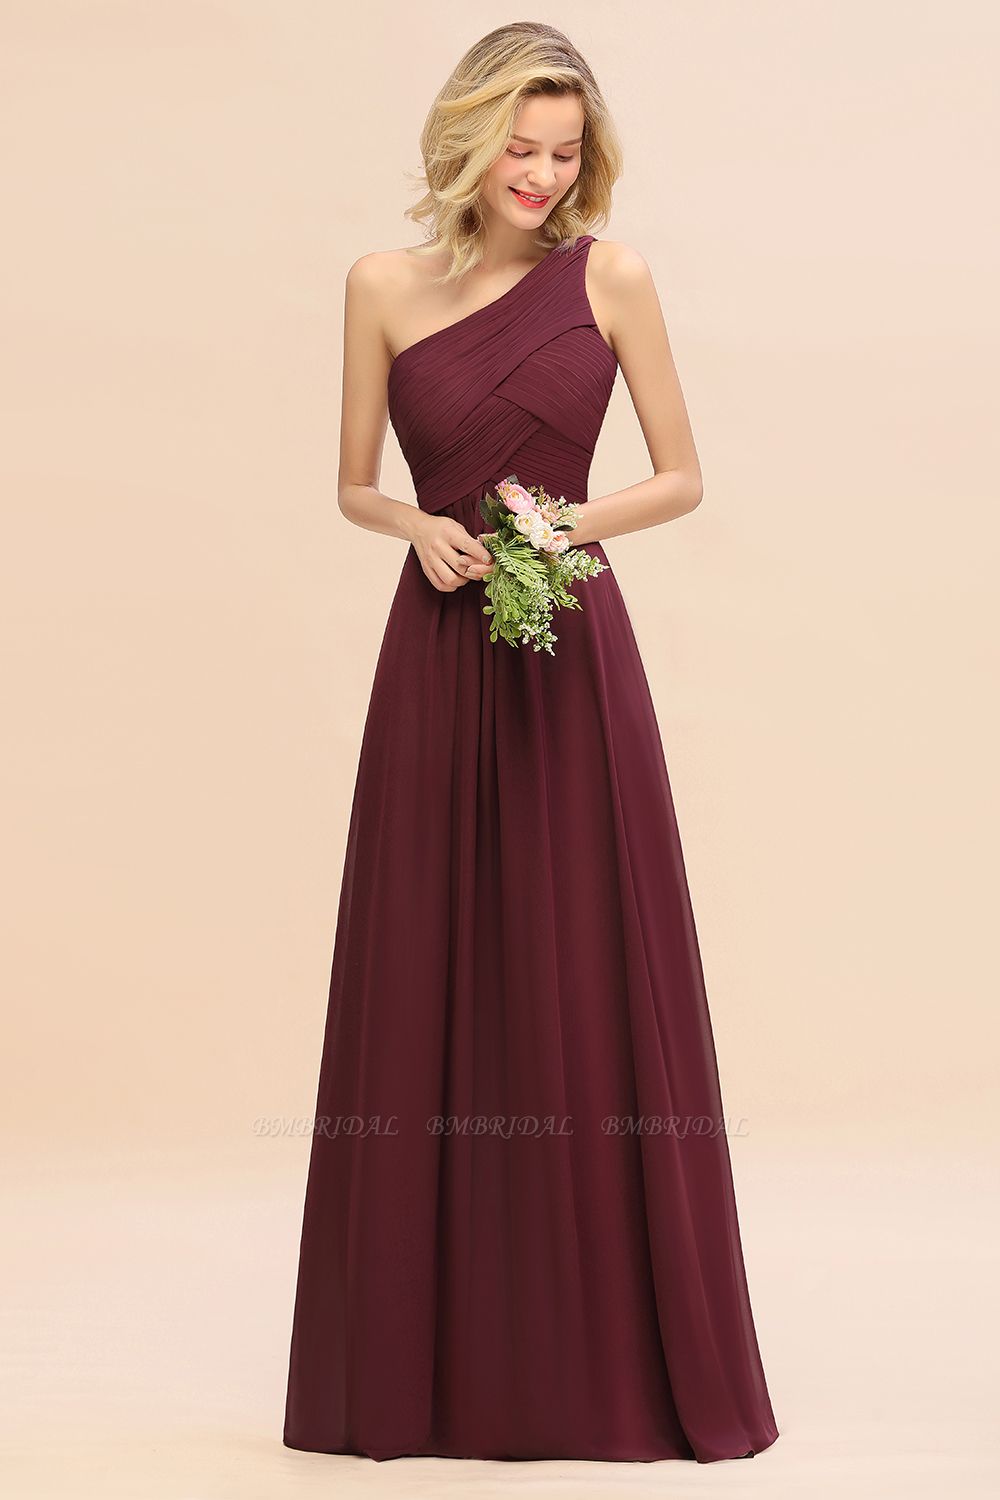 BMbridal Chic One Shoulder Ruffle Grape Chiffon Bridesmaid Dresses Online